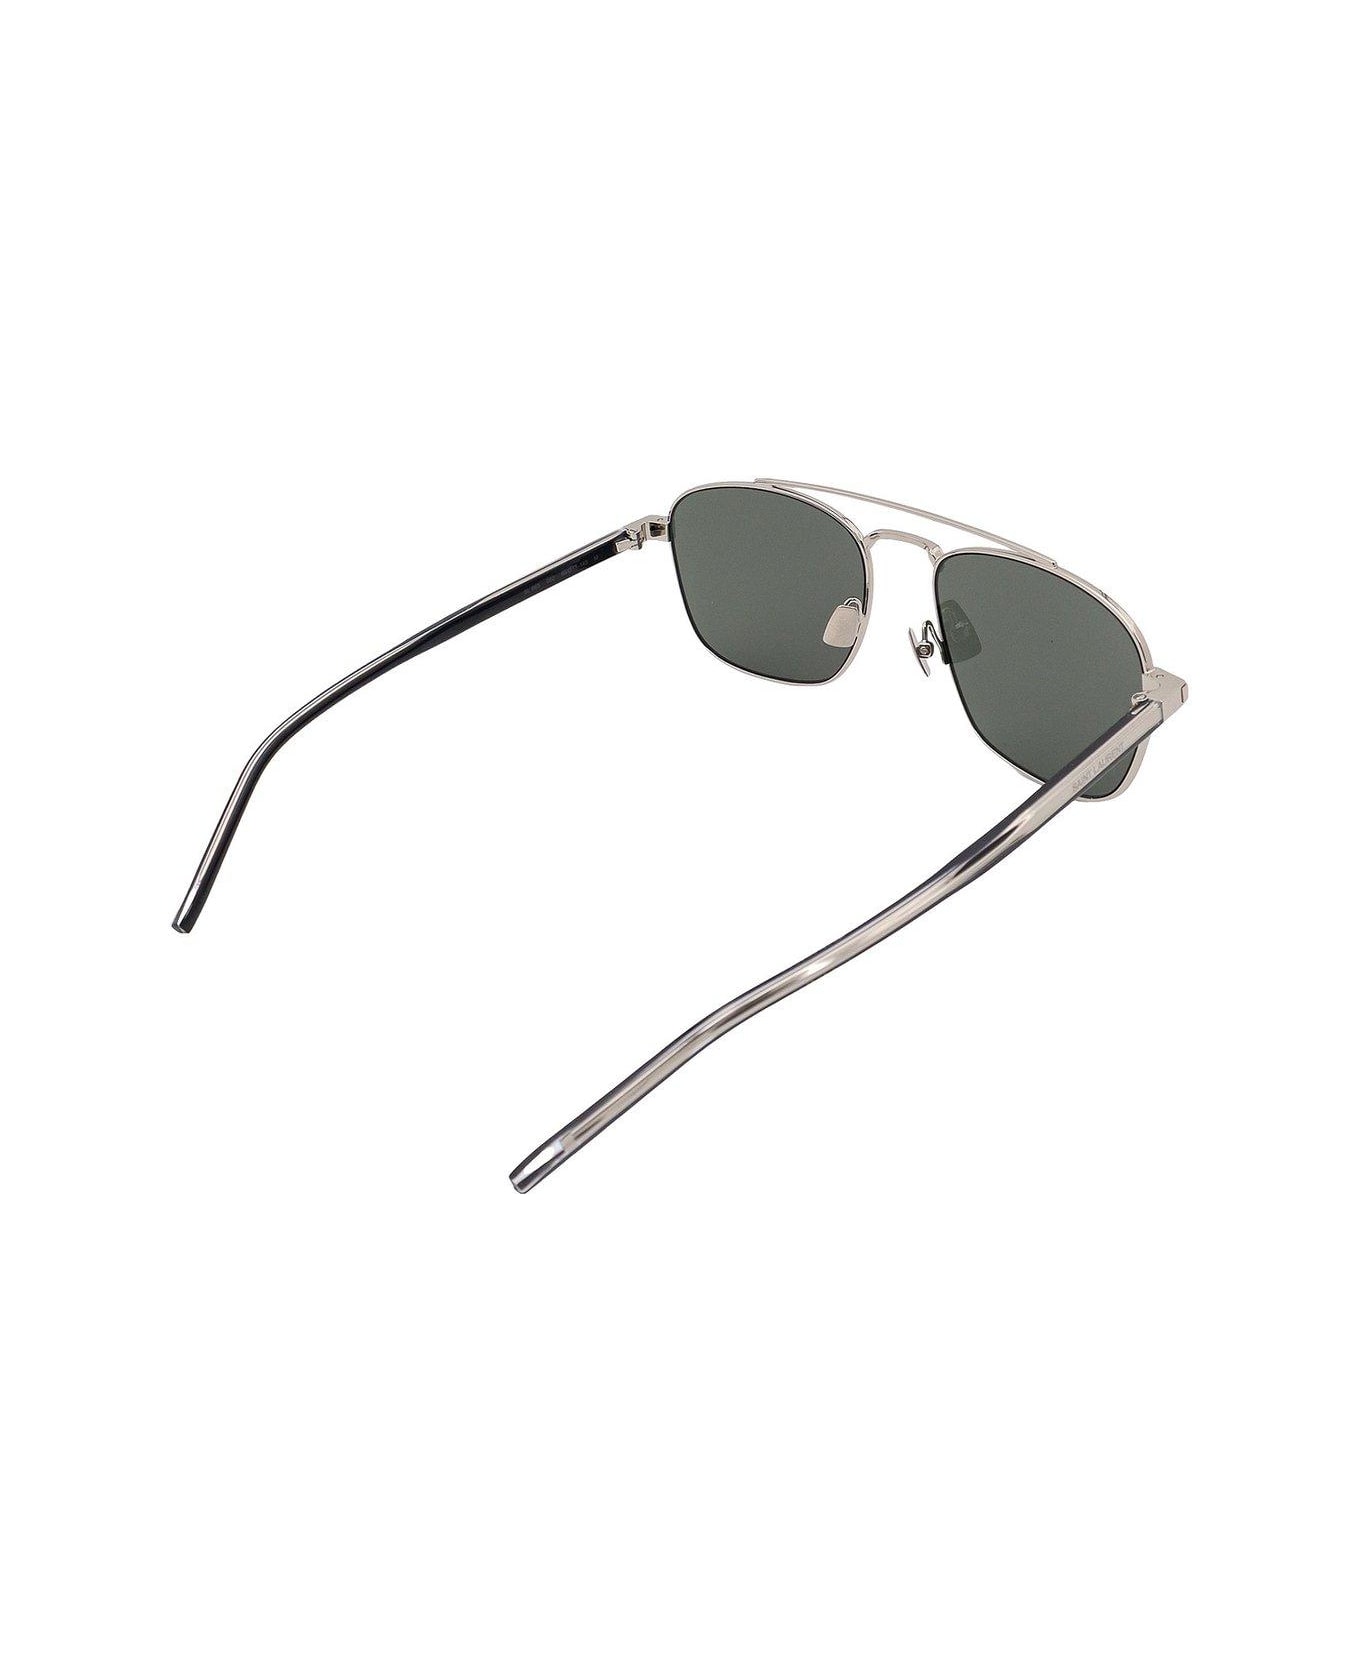 Saint Laurent Aviator Sunglasses - Argento